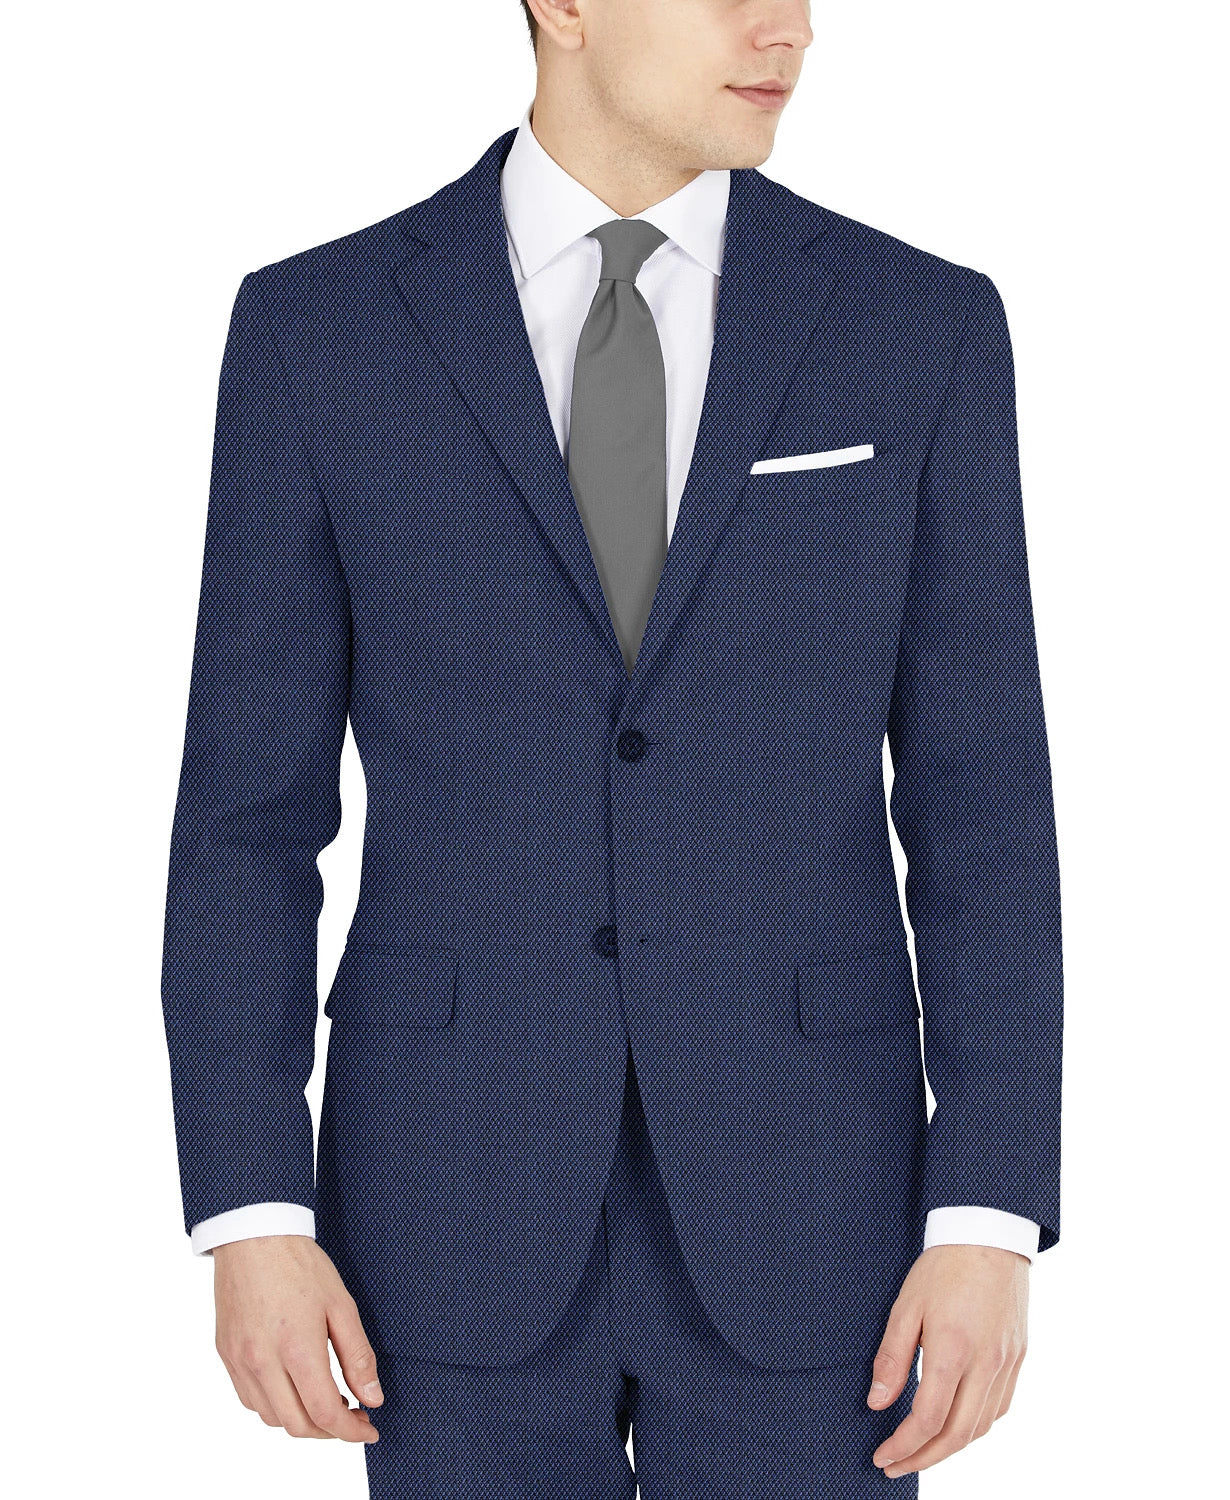 DKNY Men's Suit Jacket 46R Blue Tic Modern-Fit Performance Stretch